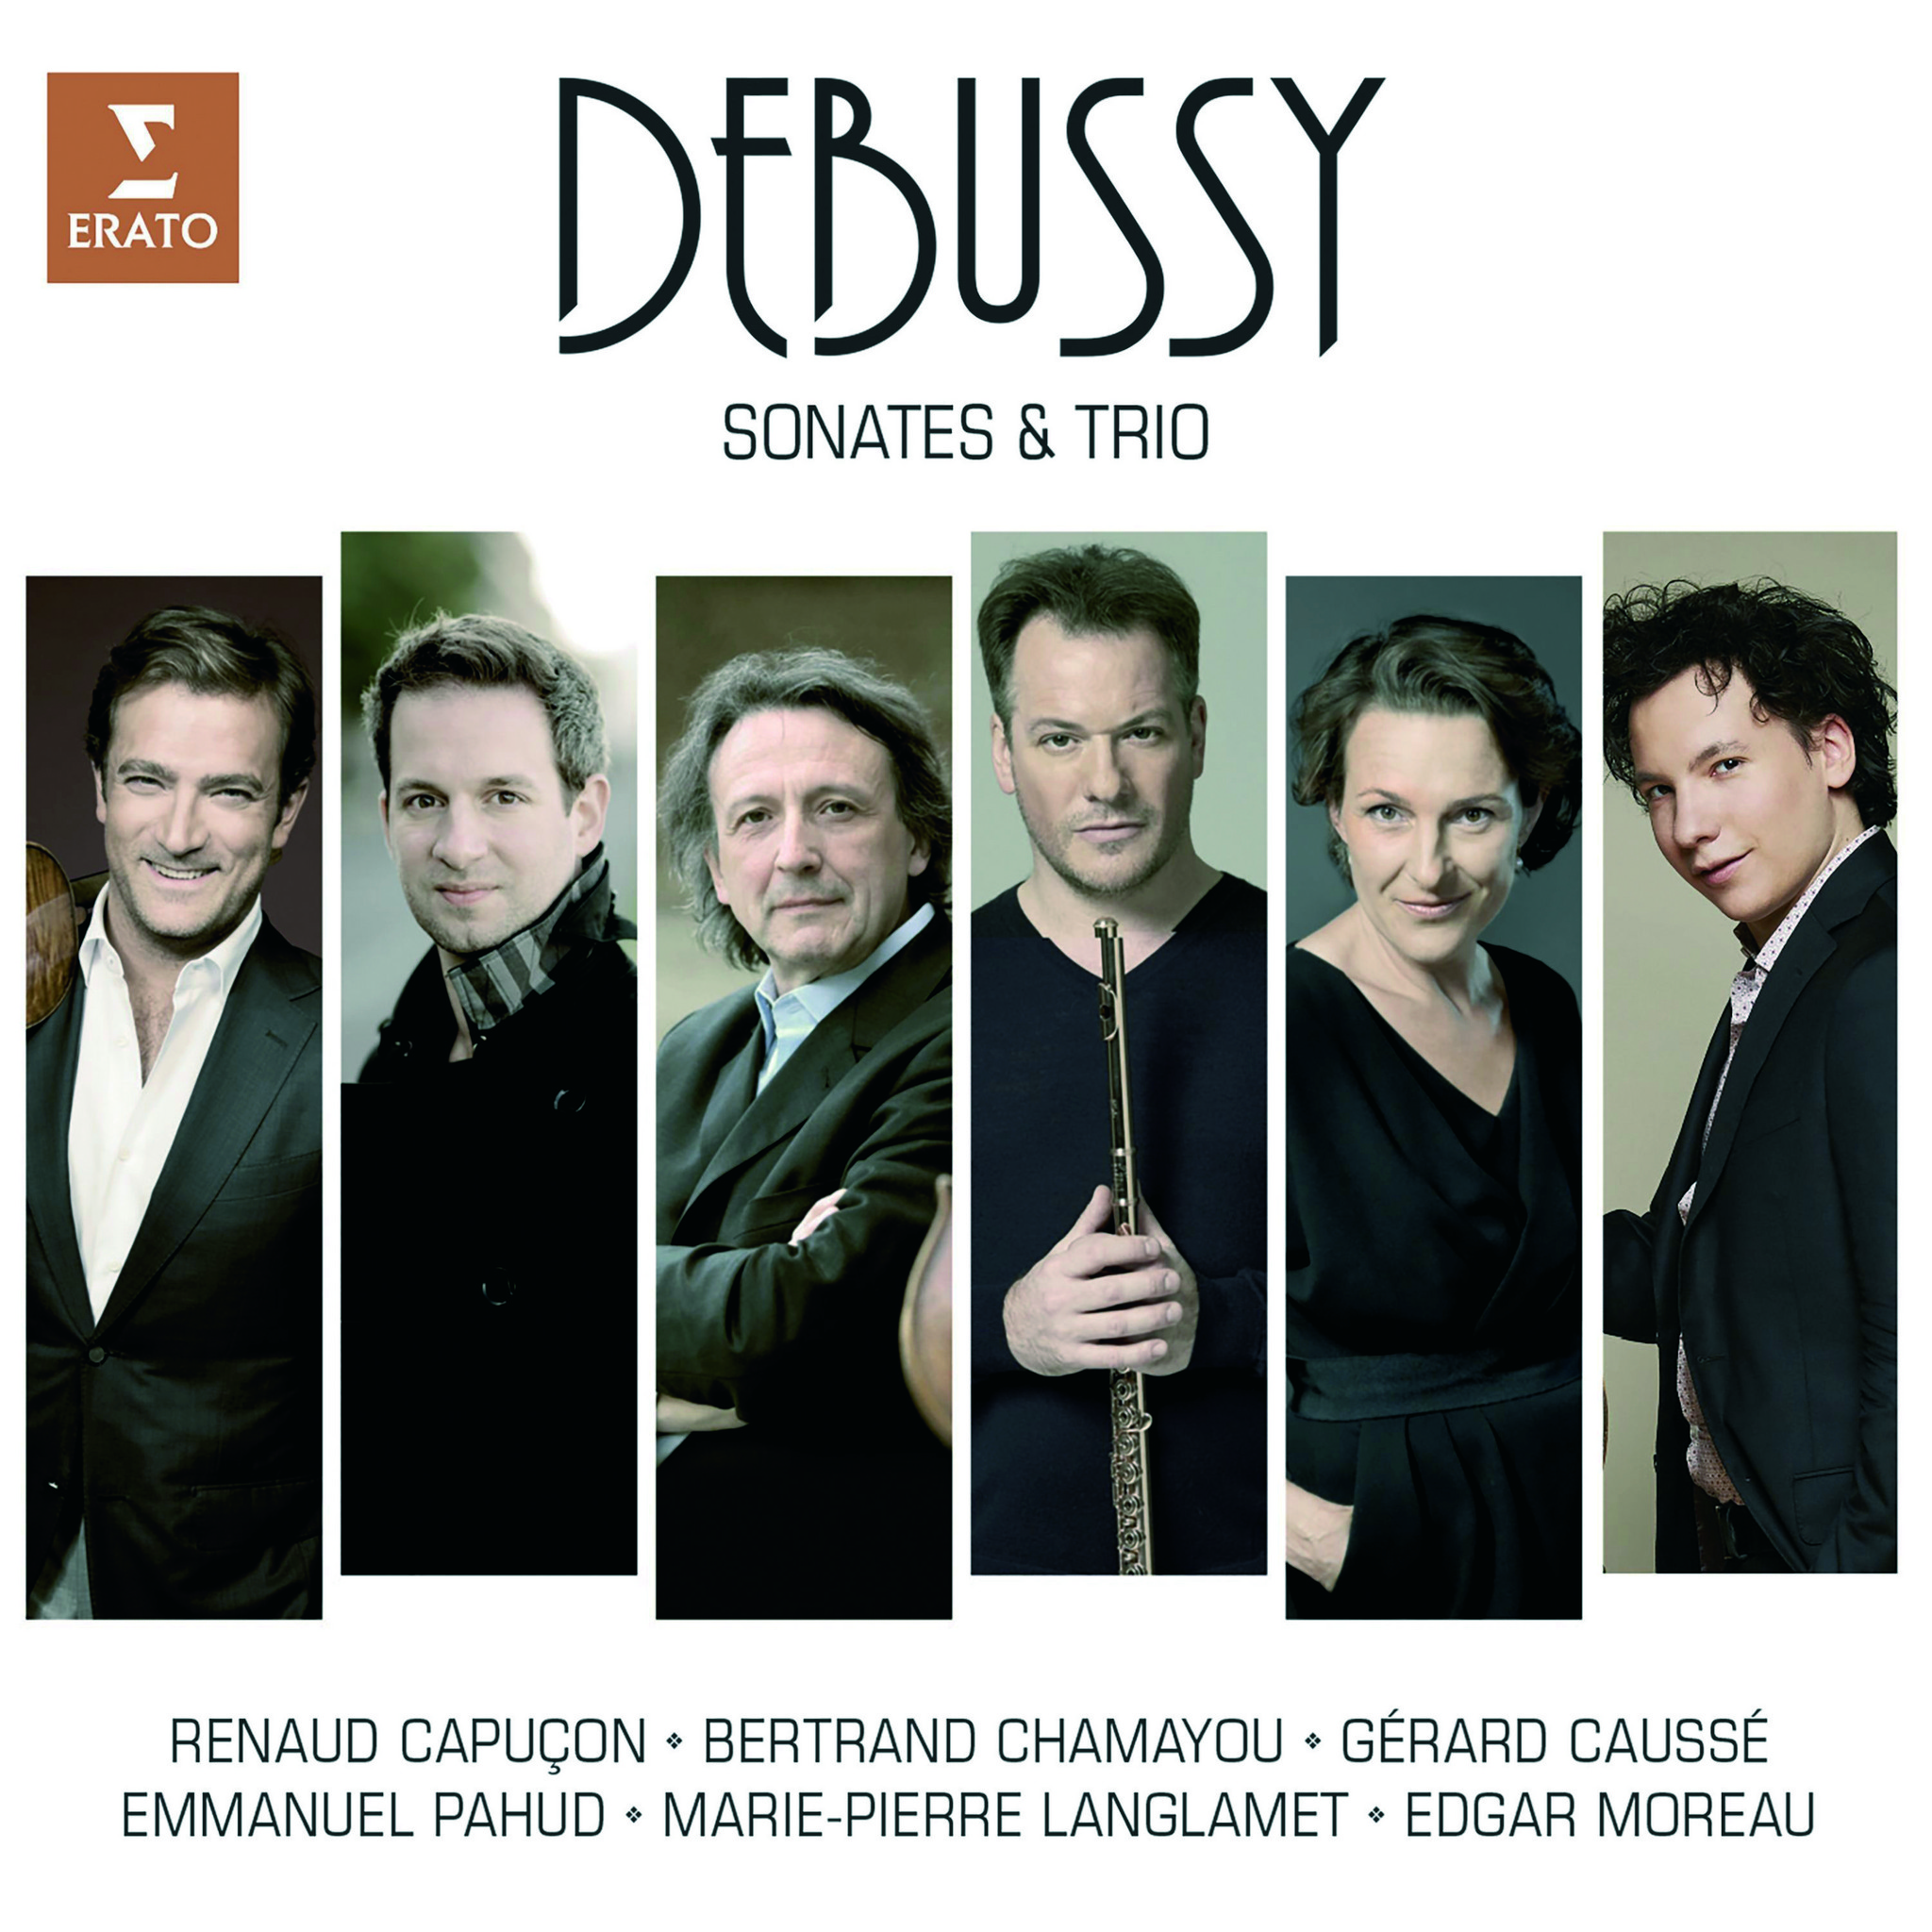 Debussy-Sonatas-And-Piano-Trio-cover.jpg